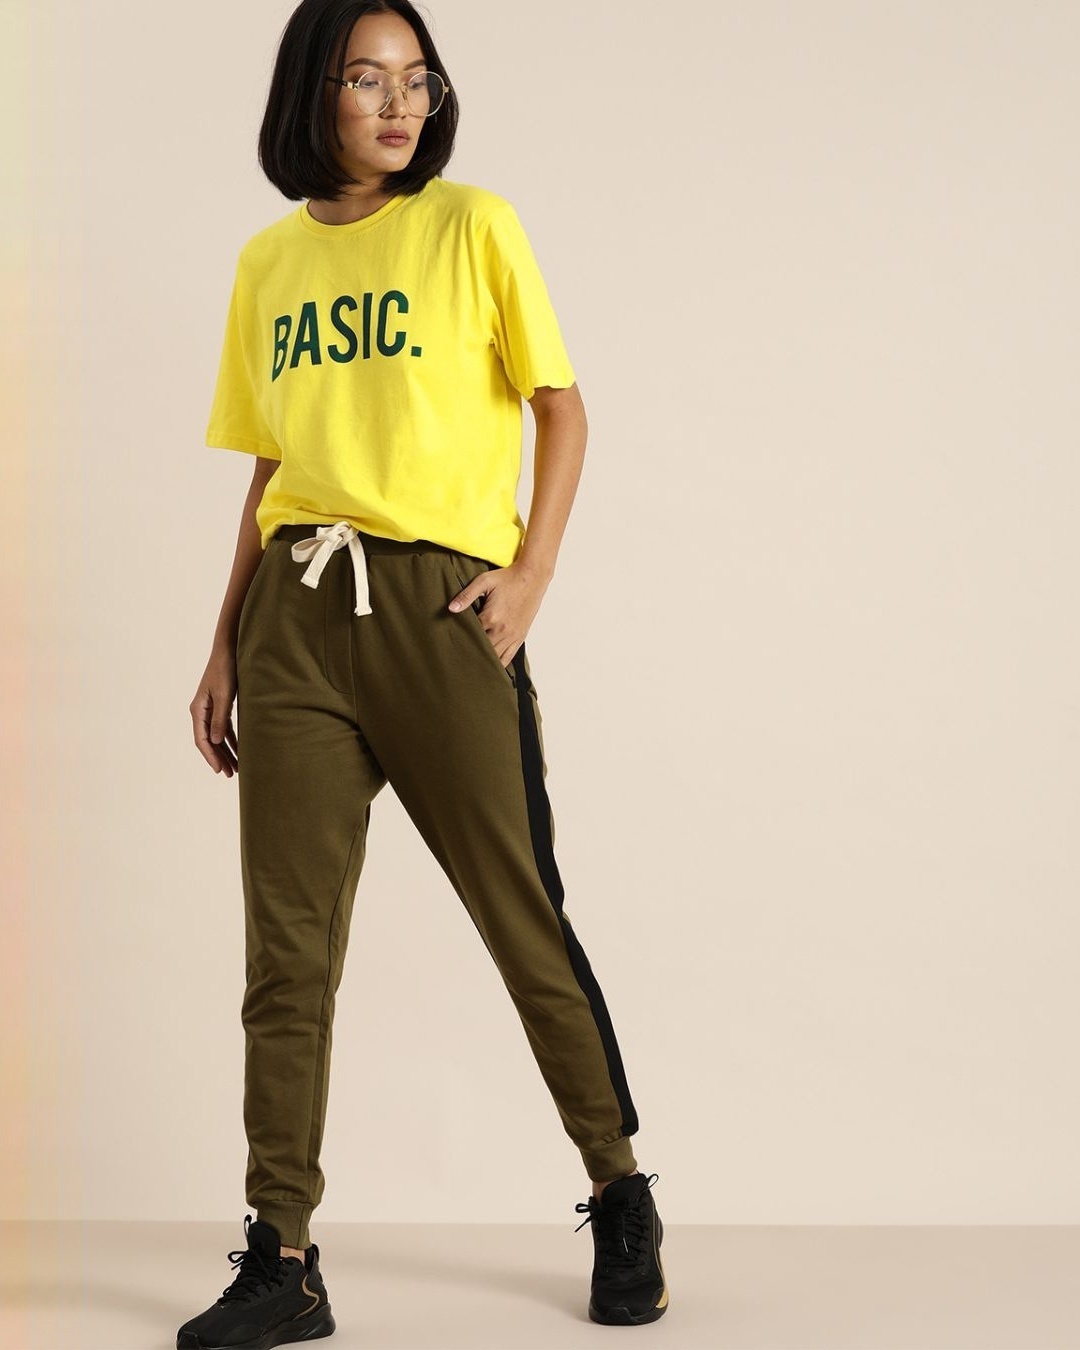 Shop Women's Yellow Typography T-shirt